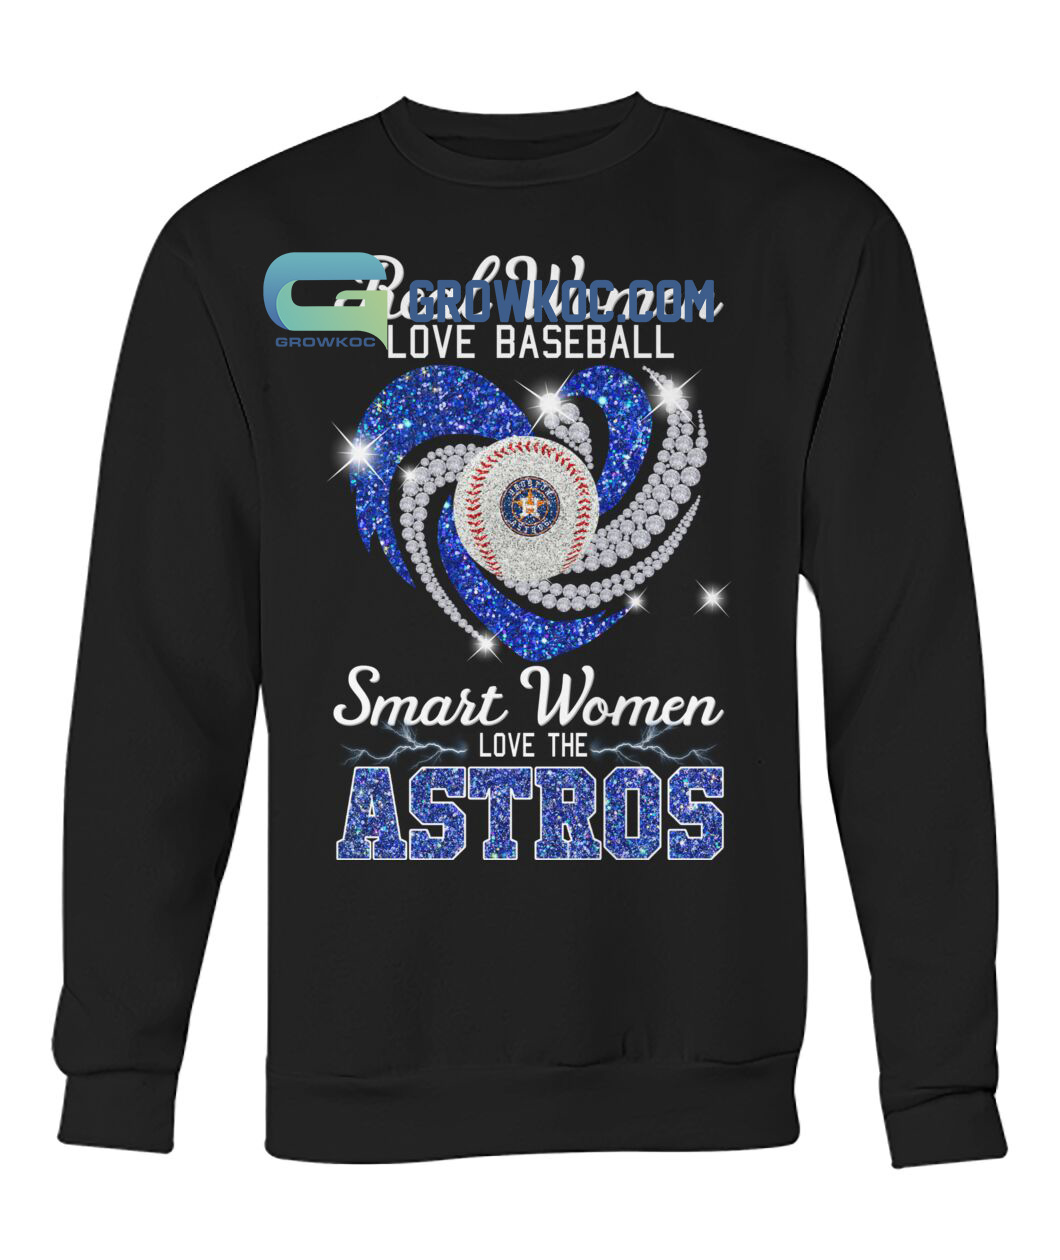 Real women love baseball smart women love Houston Astros shirt - Kingteeshop